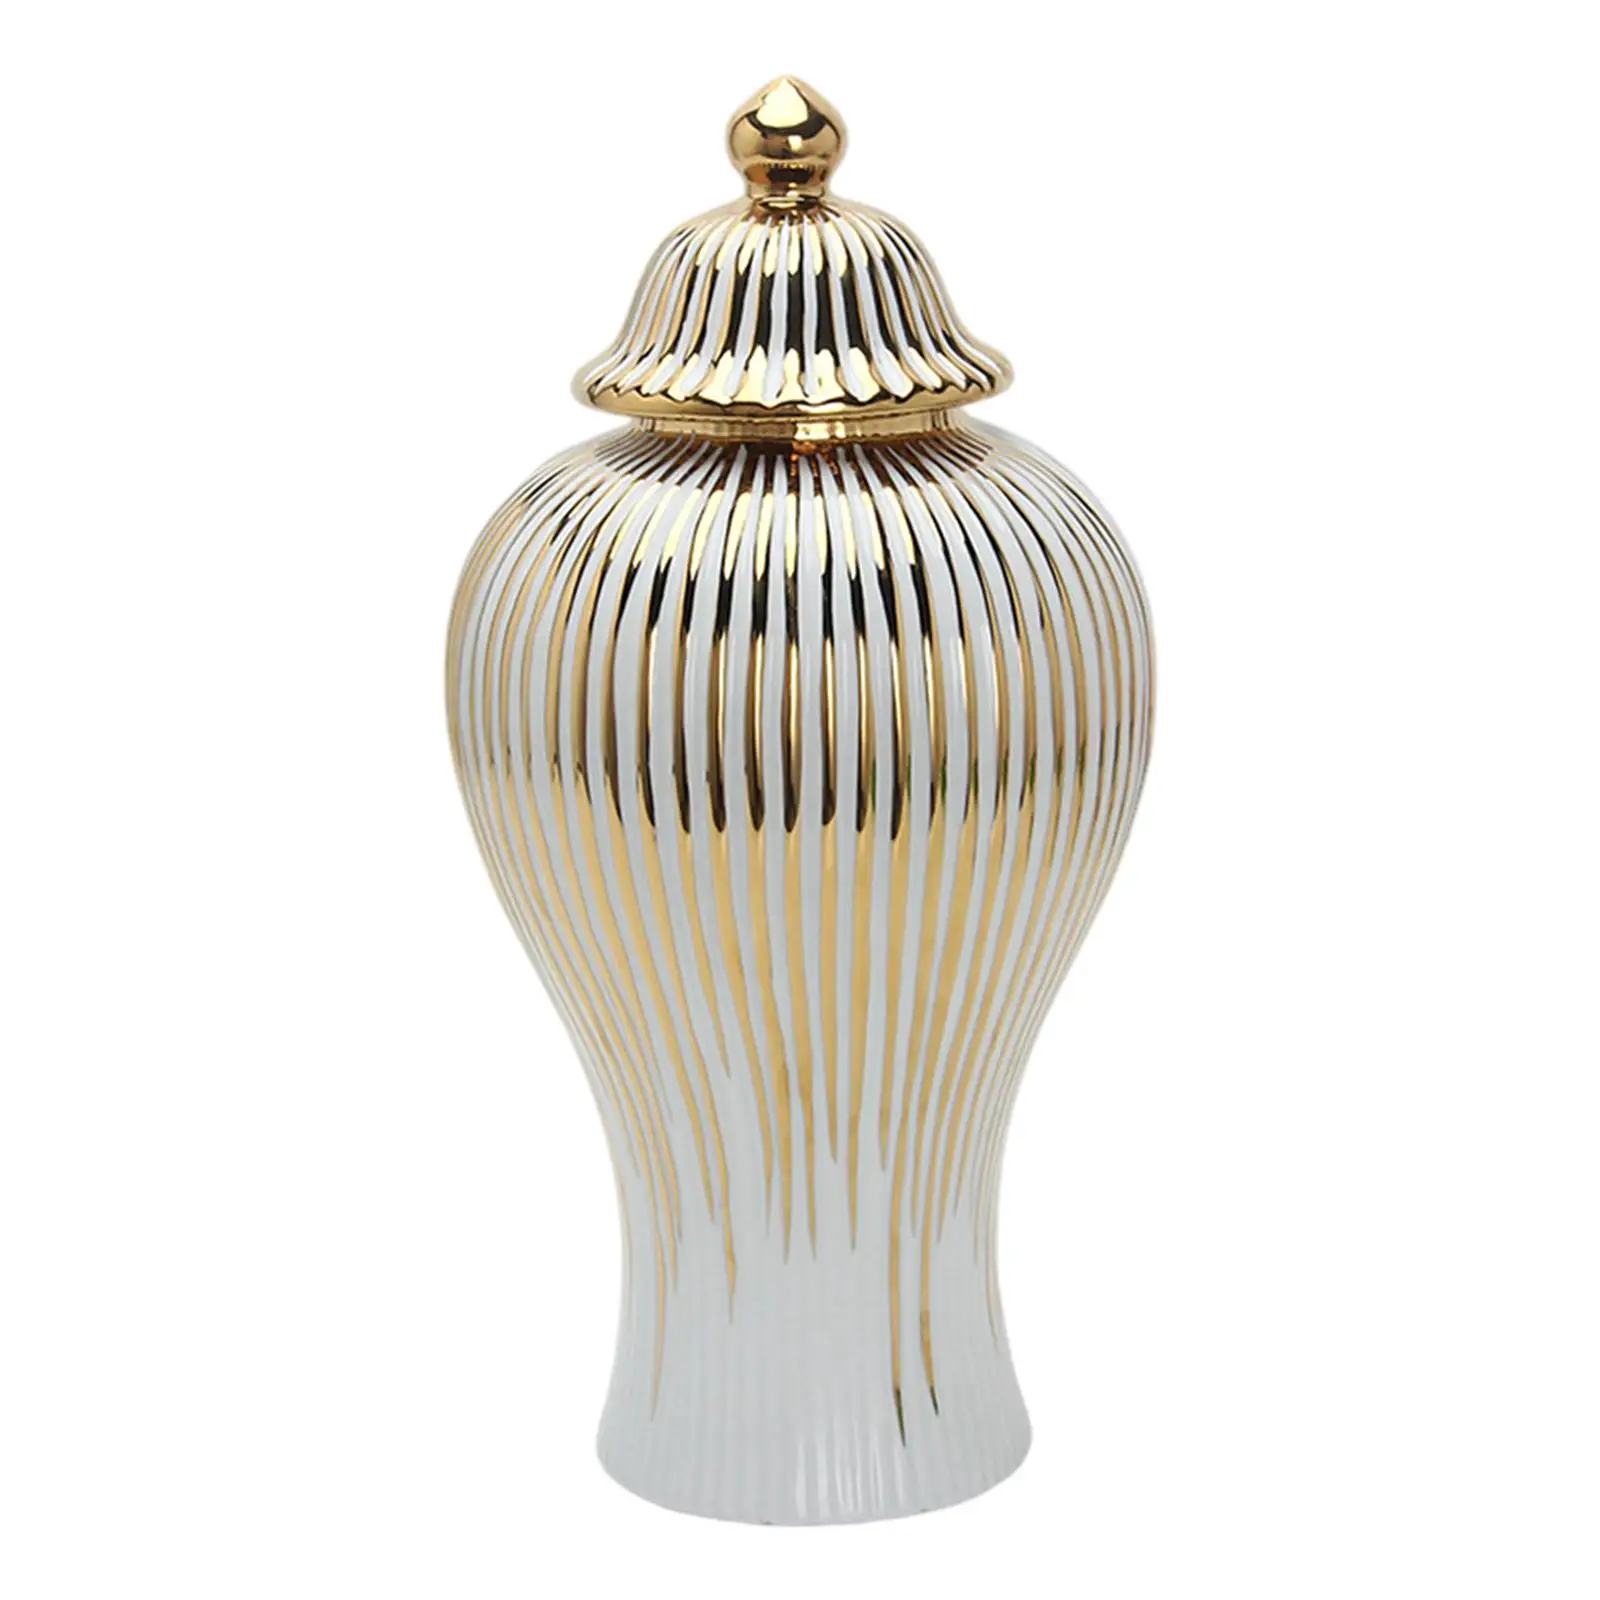 Porcelain Ginger Jar Storage Bottle with Lid Large Capacity Collectible Vase